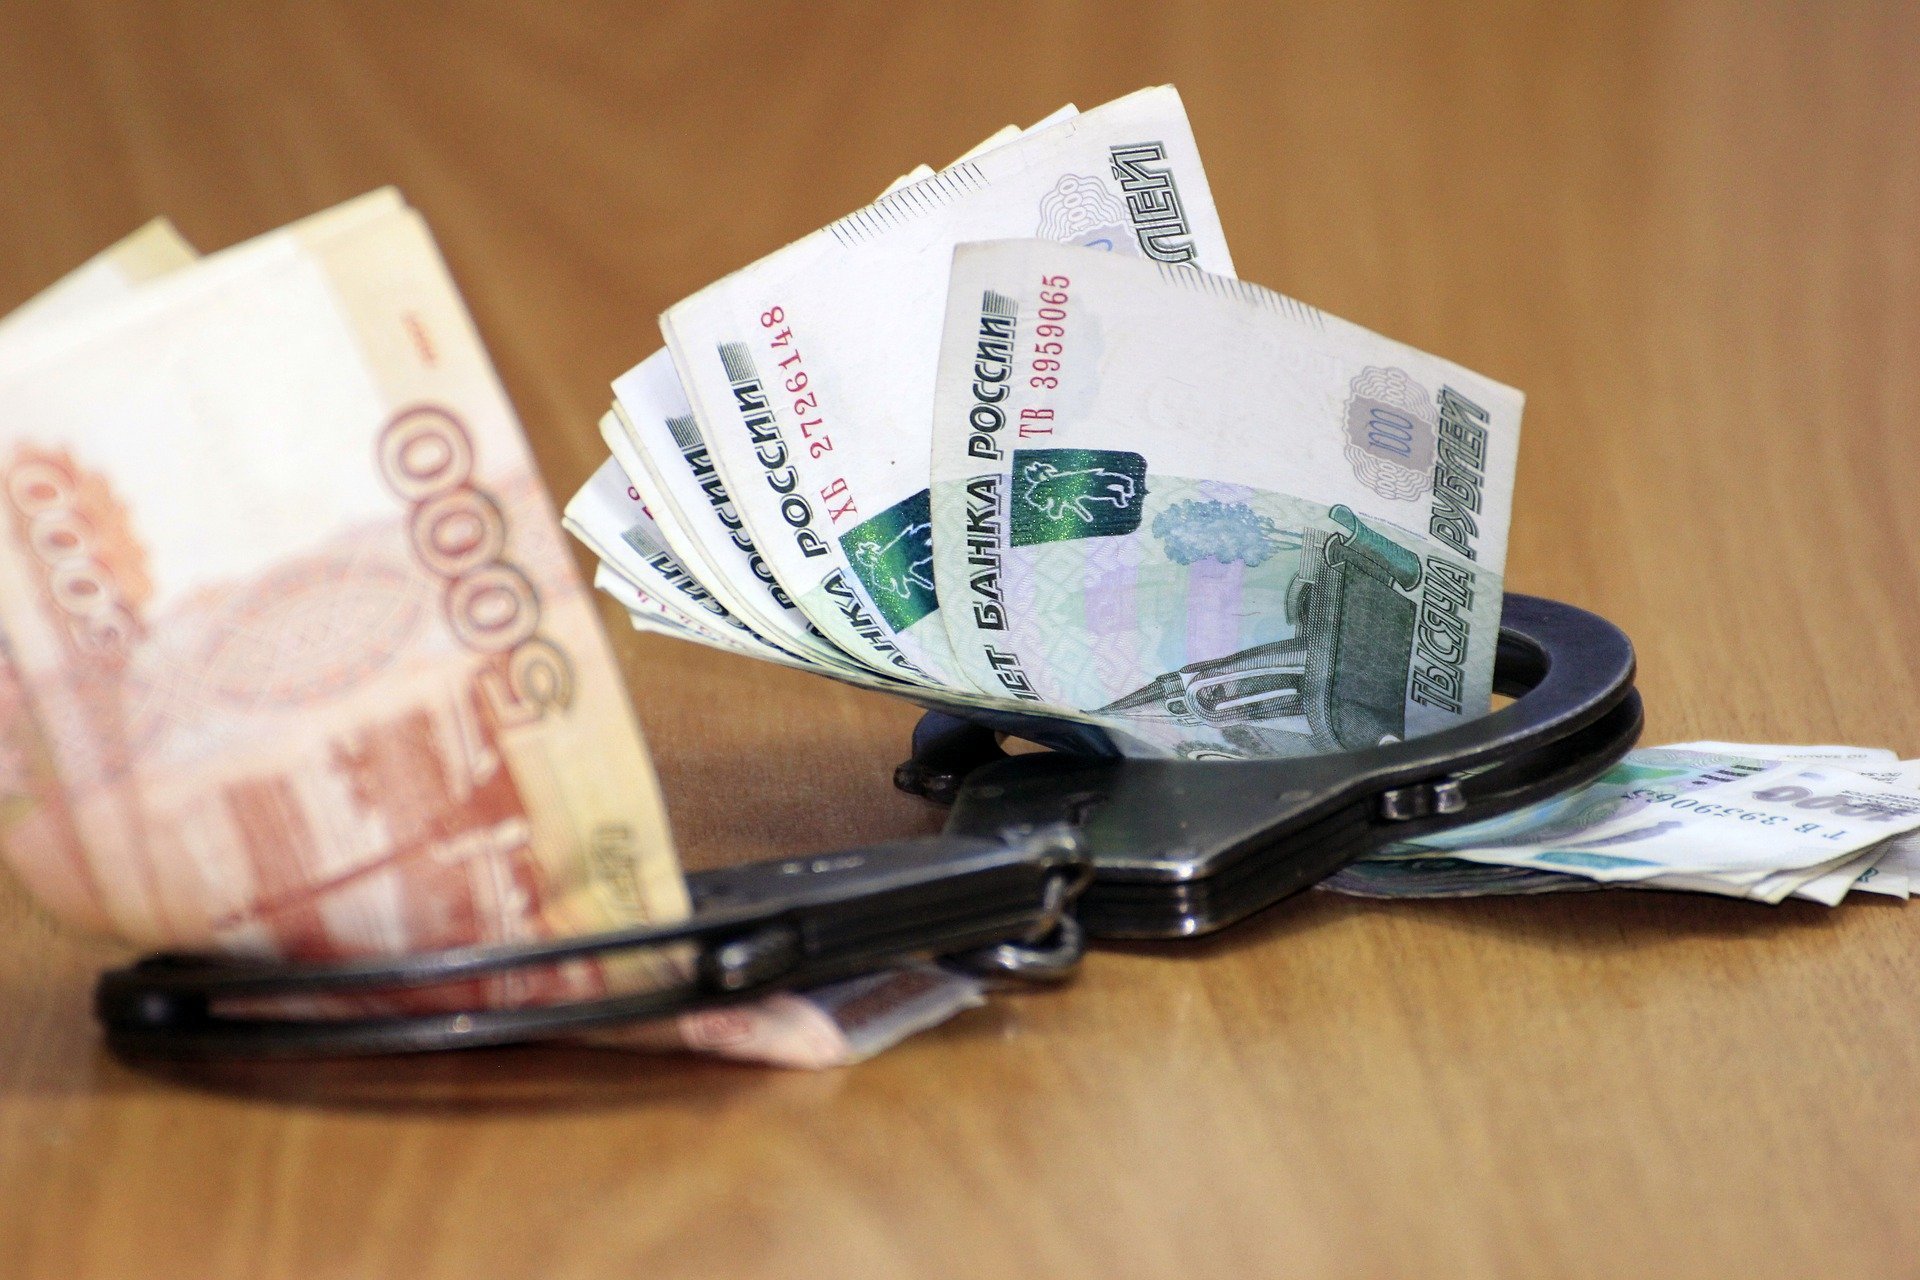 

Члена комиссии по закупкам в Ижевске заподозрили в подкупе

